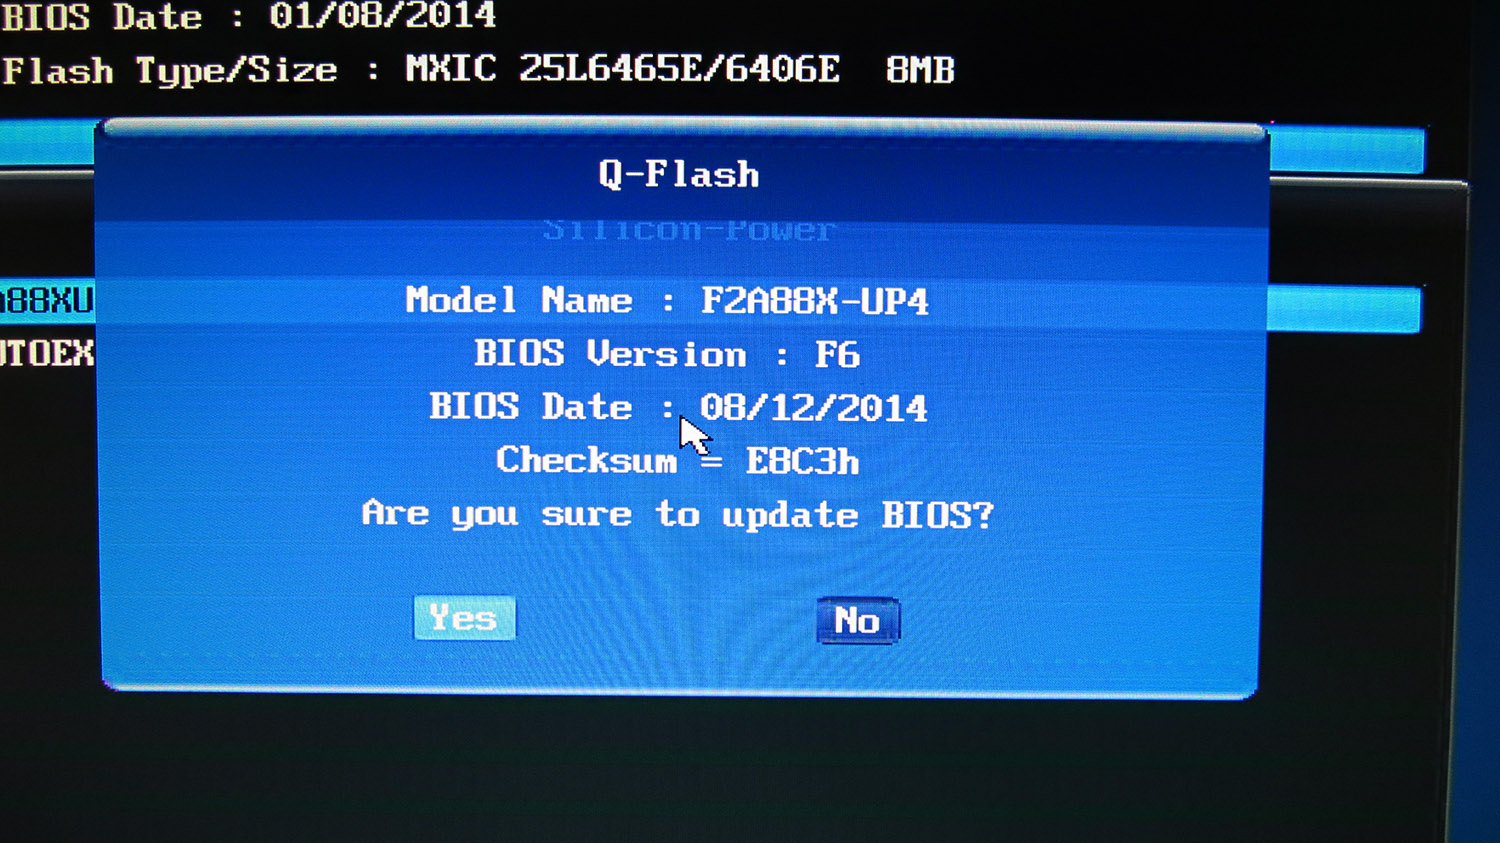 BIOS File Info